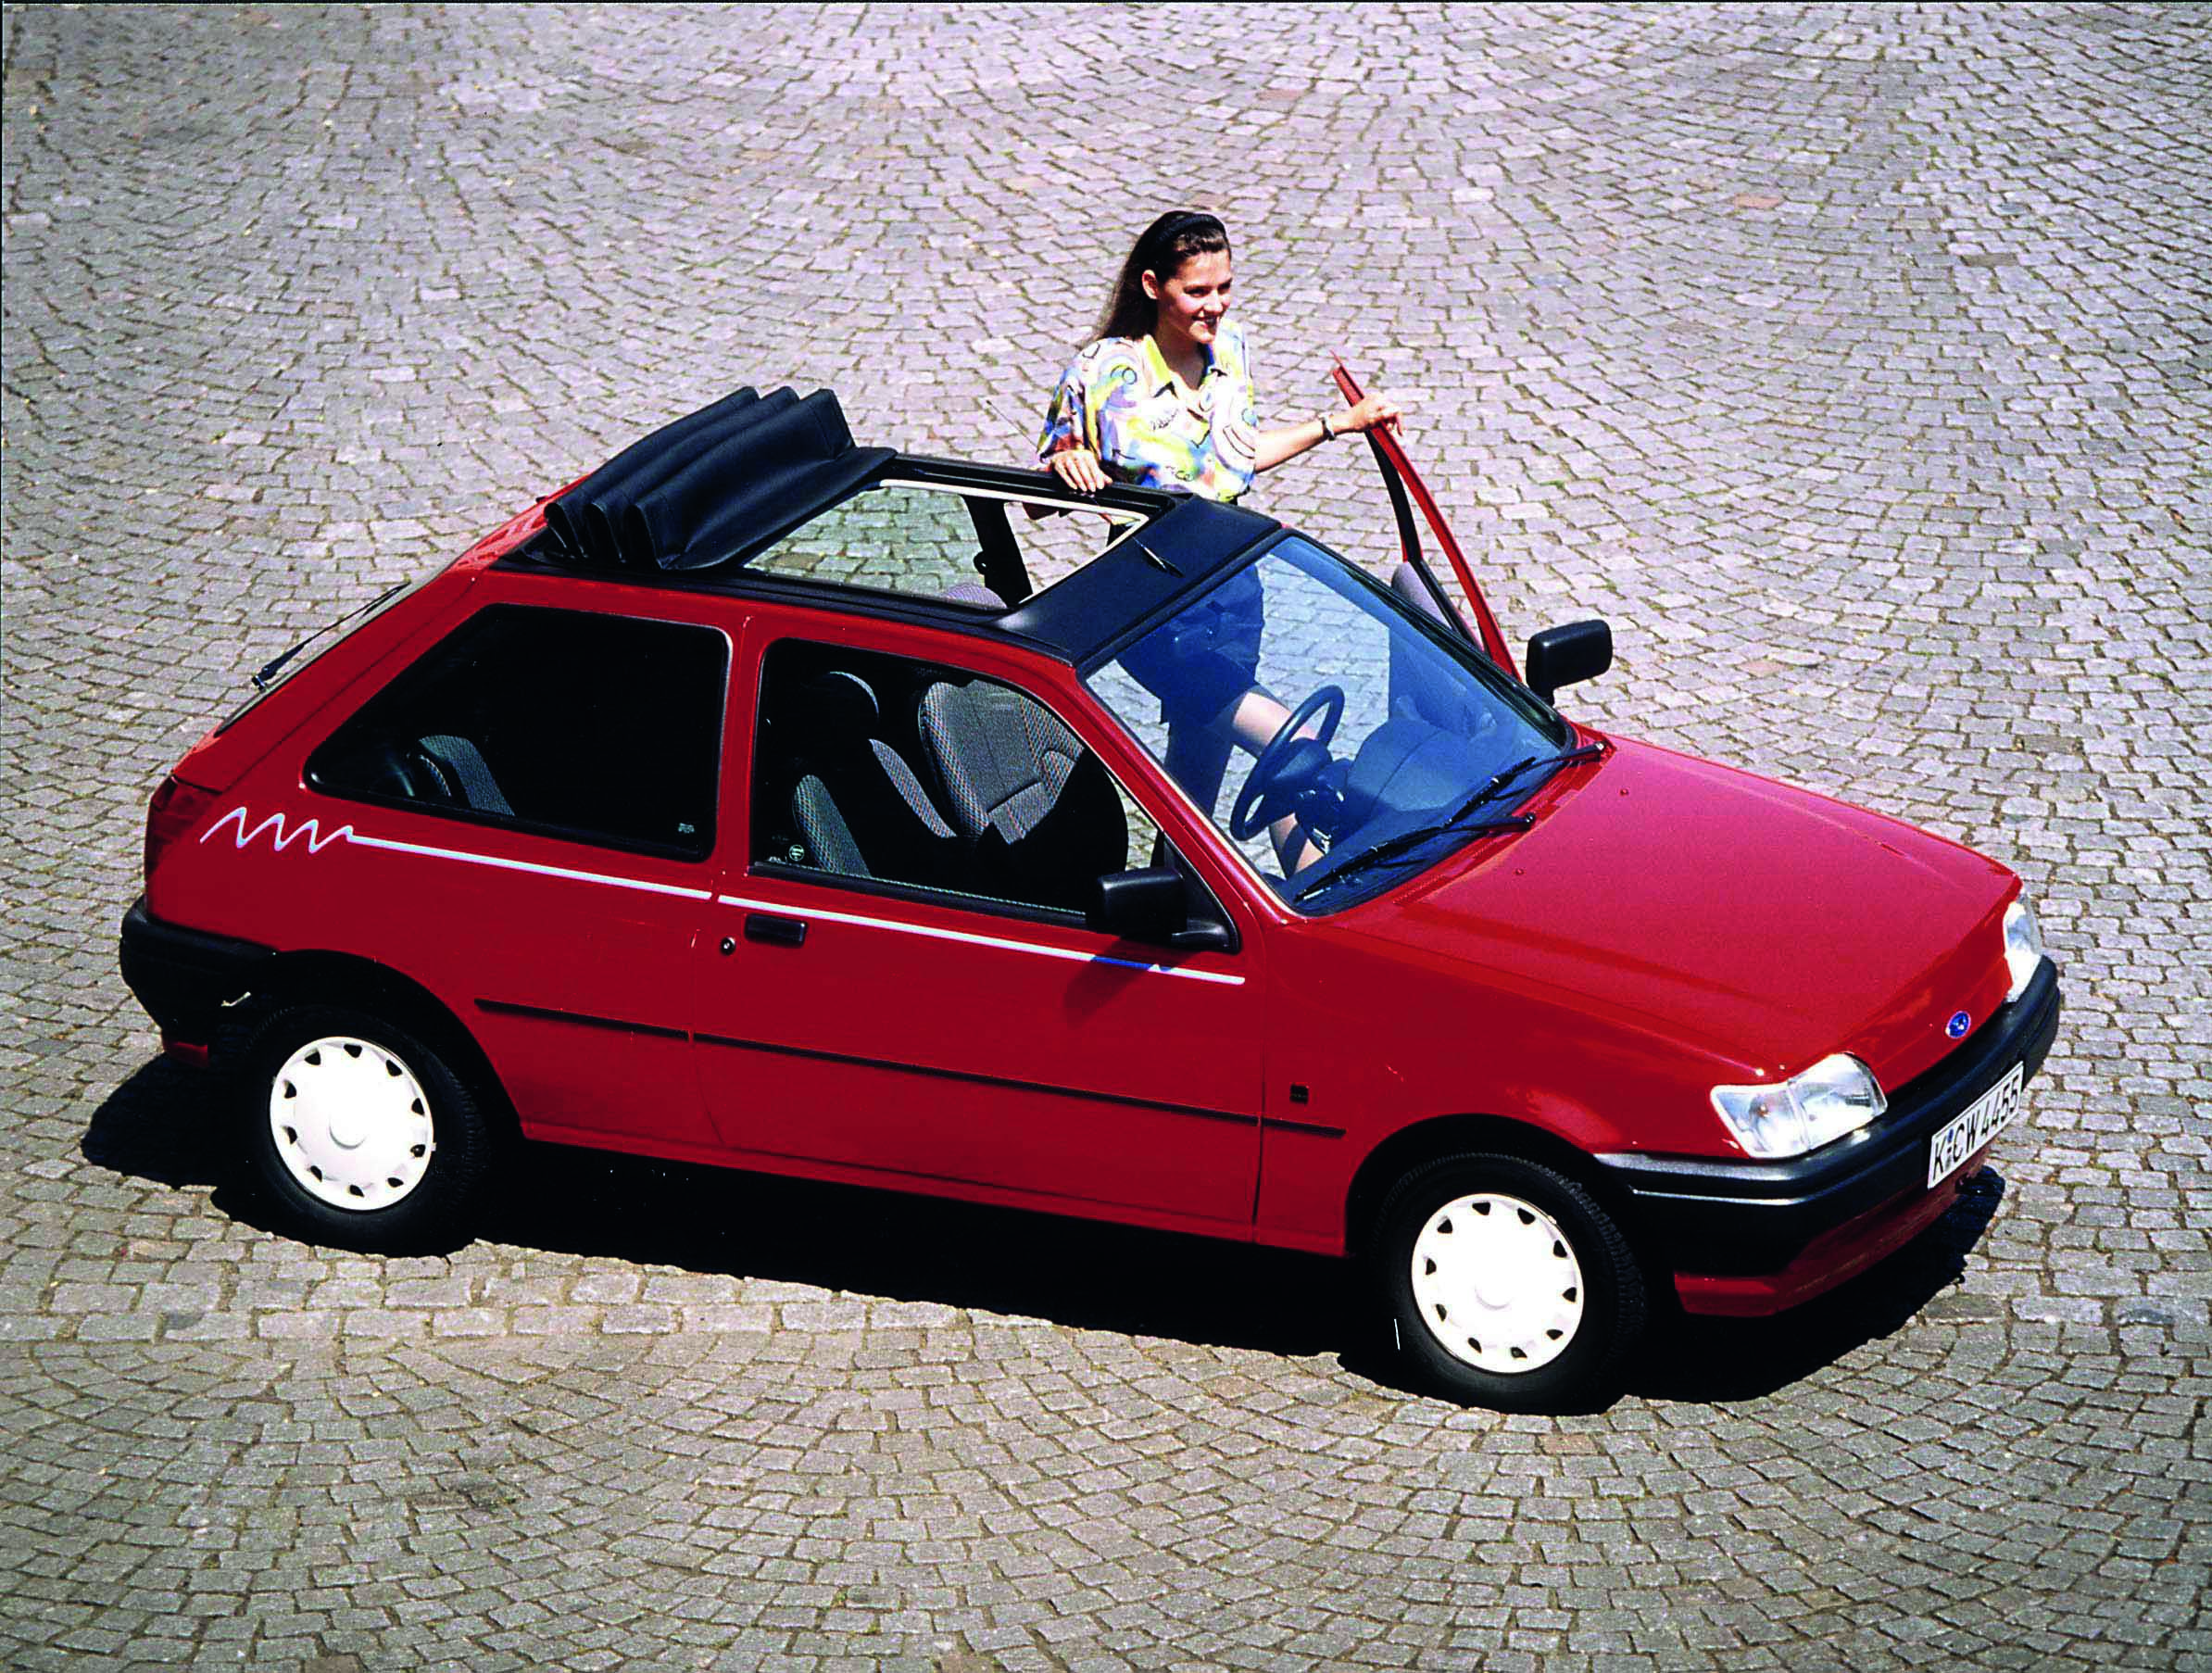 The 1993 Ford Fiesta Calypso